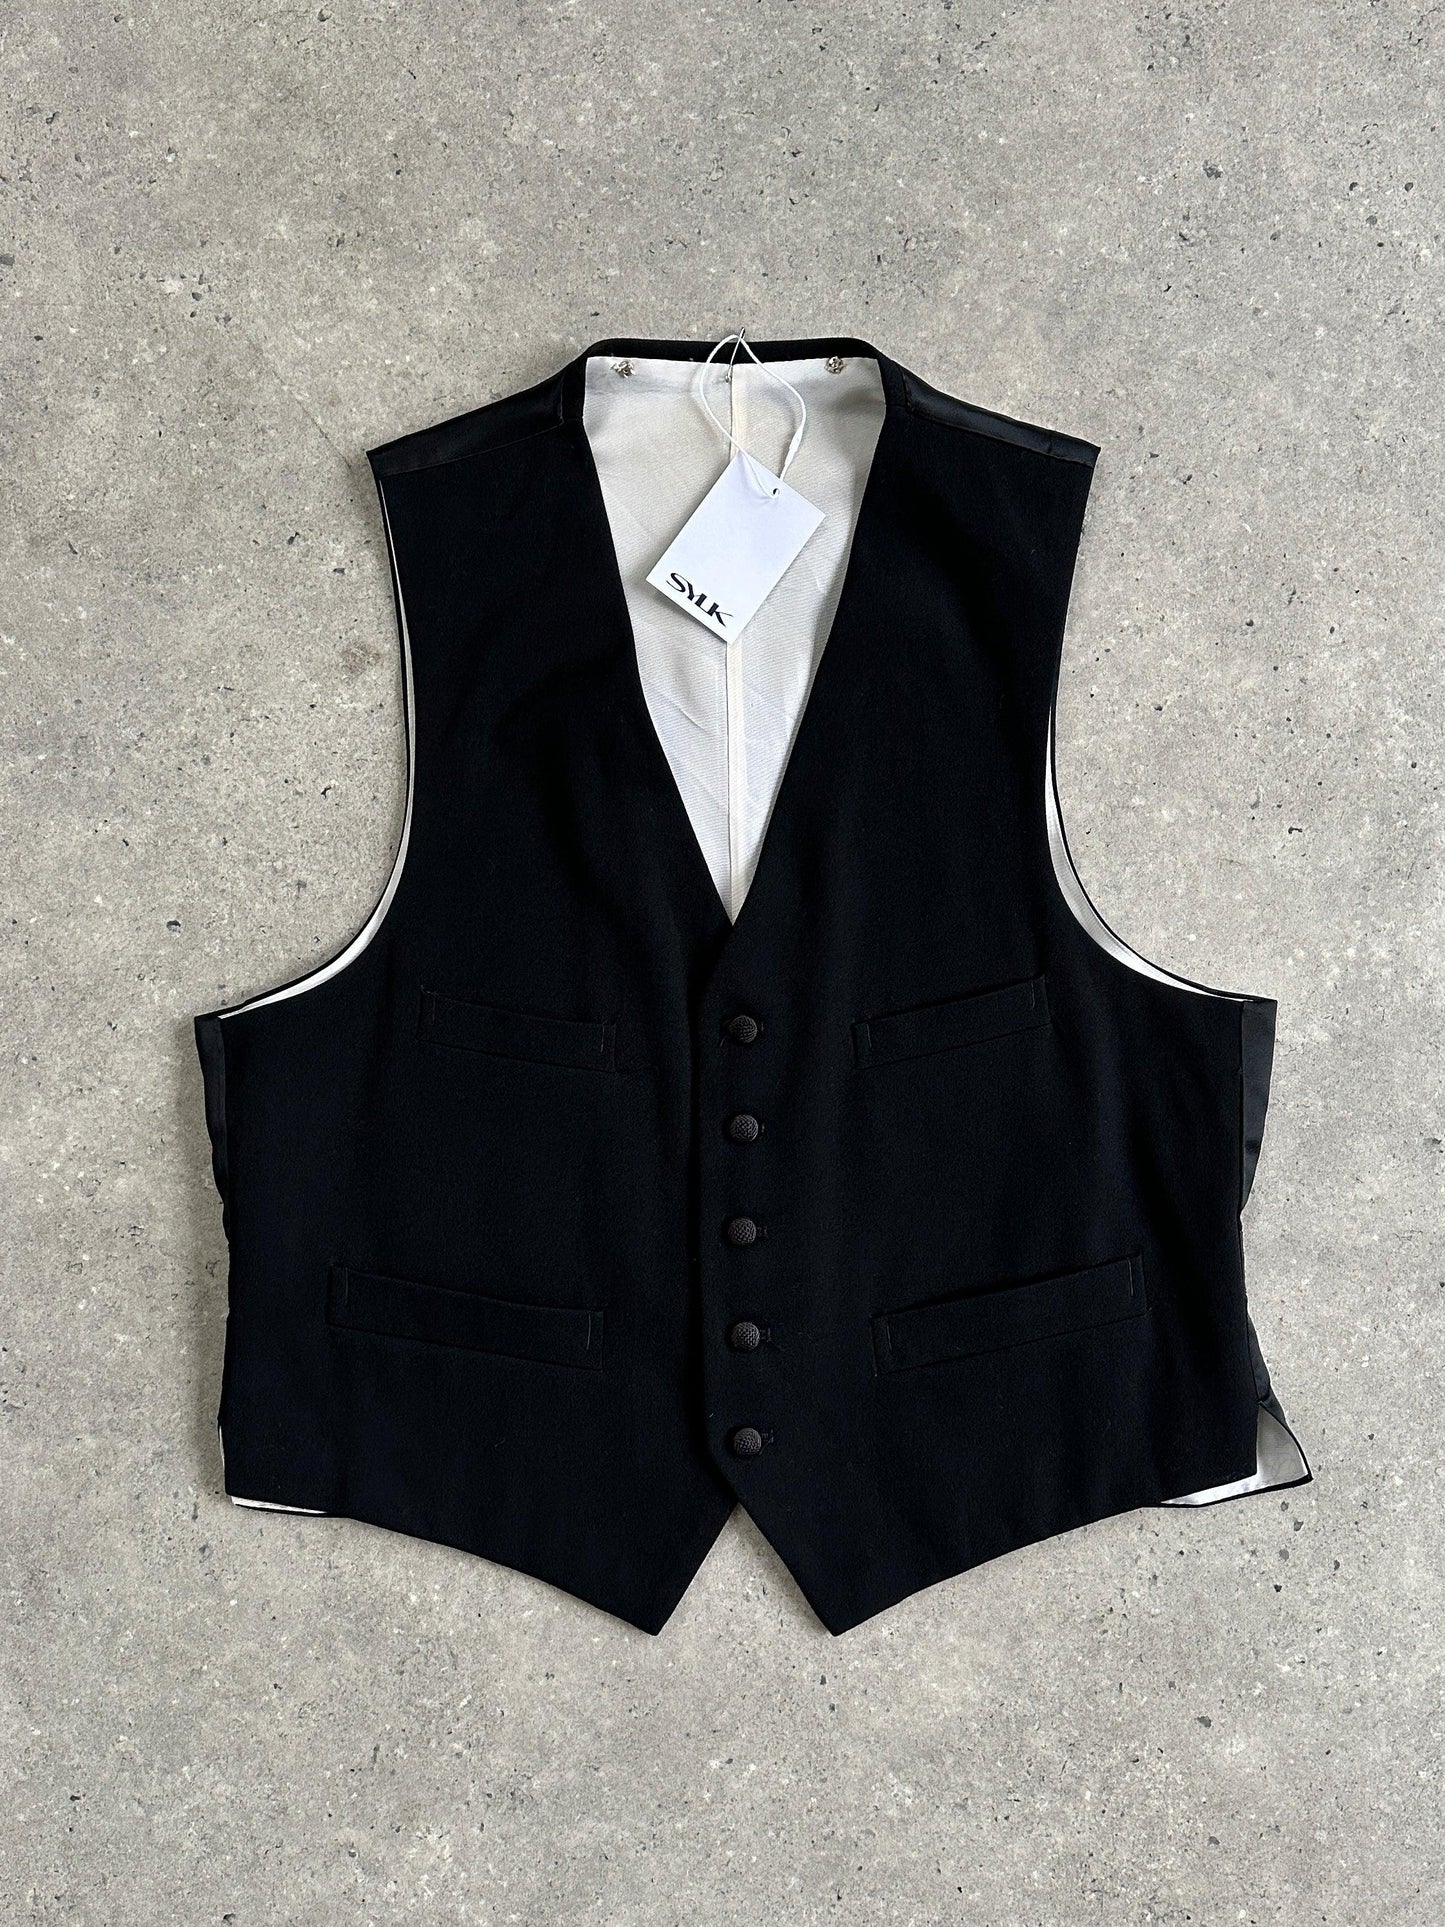 Vintage Wool Blend Tuxedo Waistcoat - M/L - Known Source